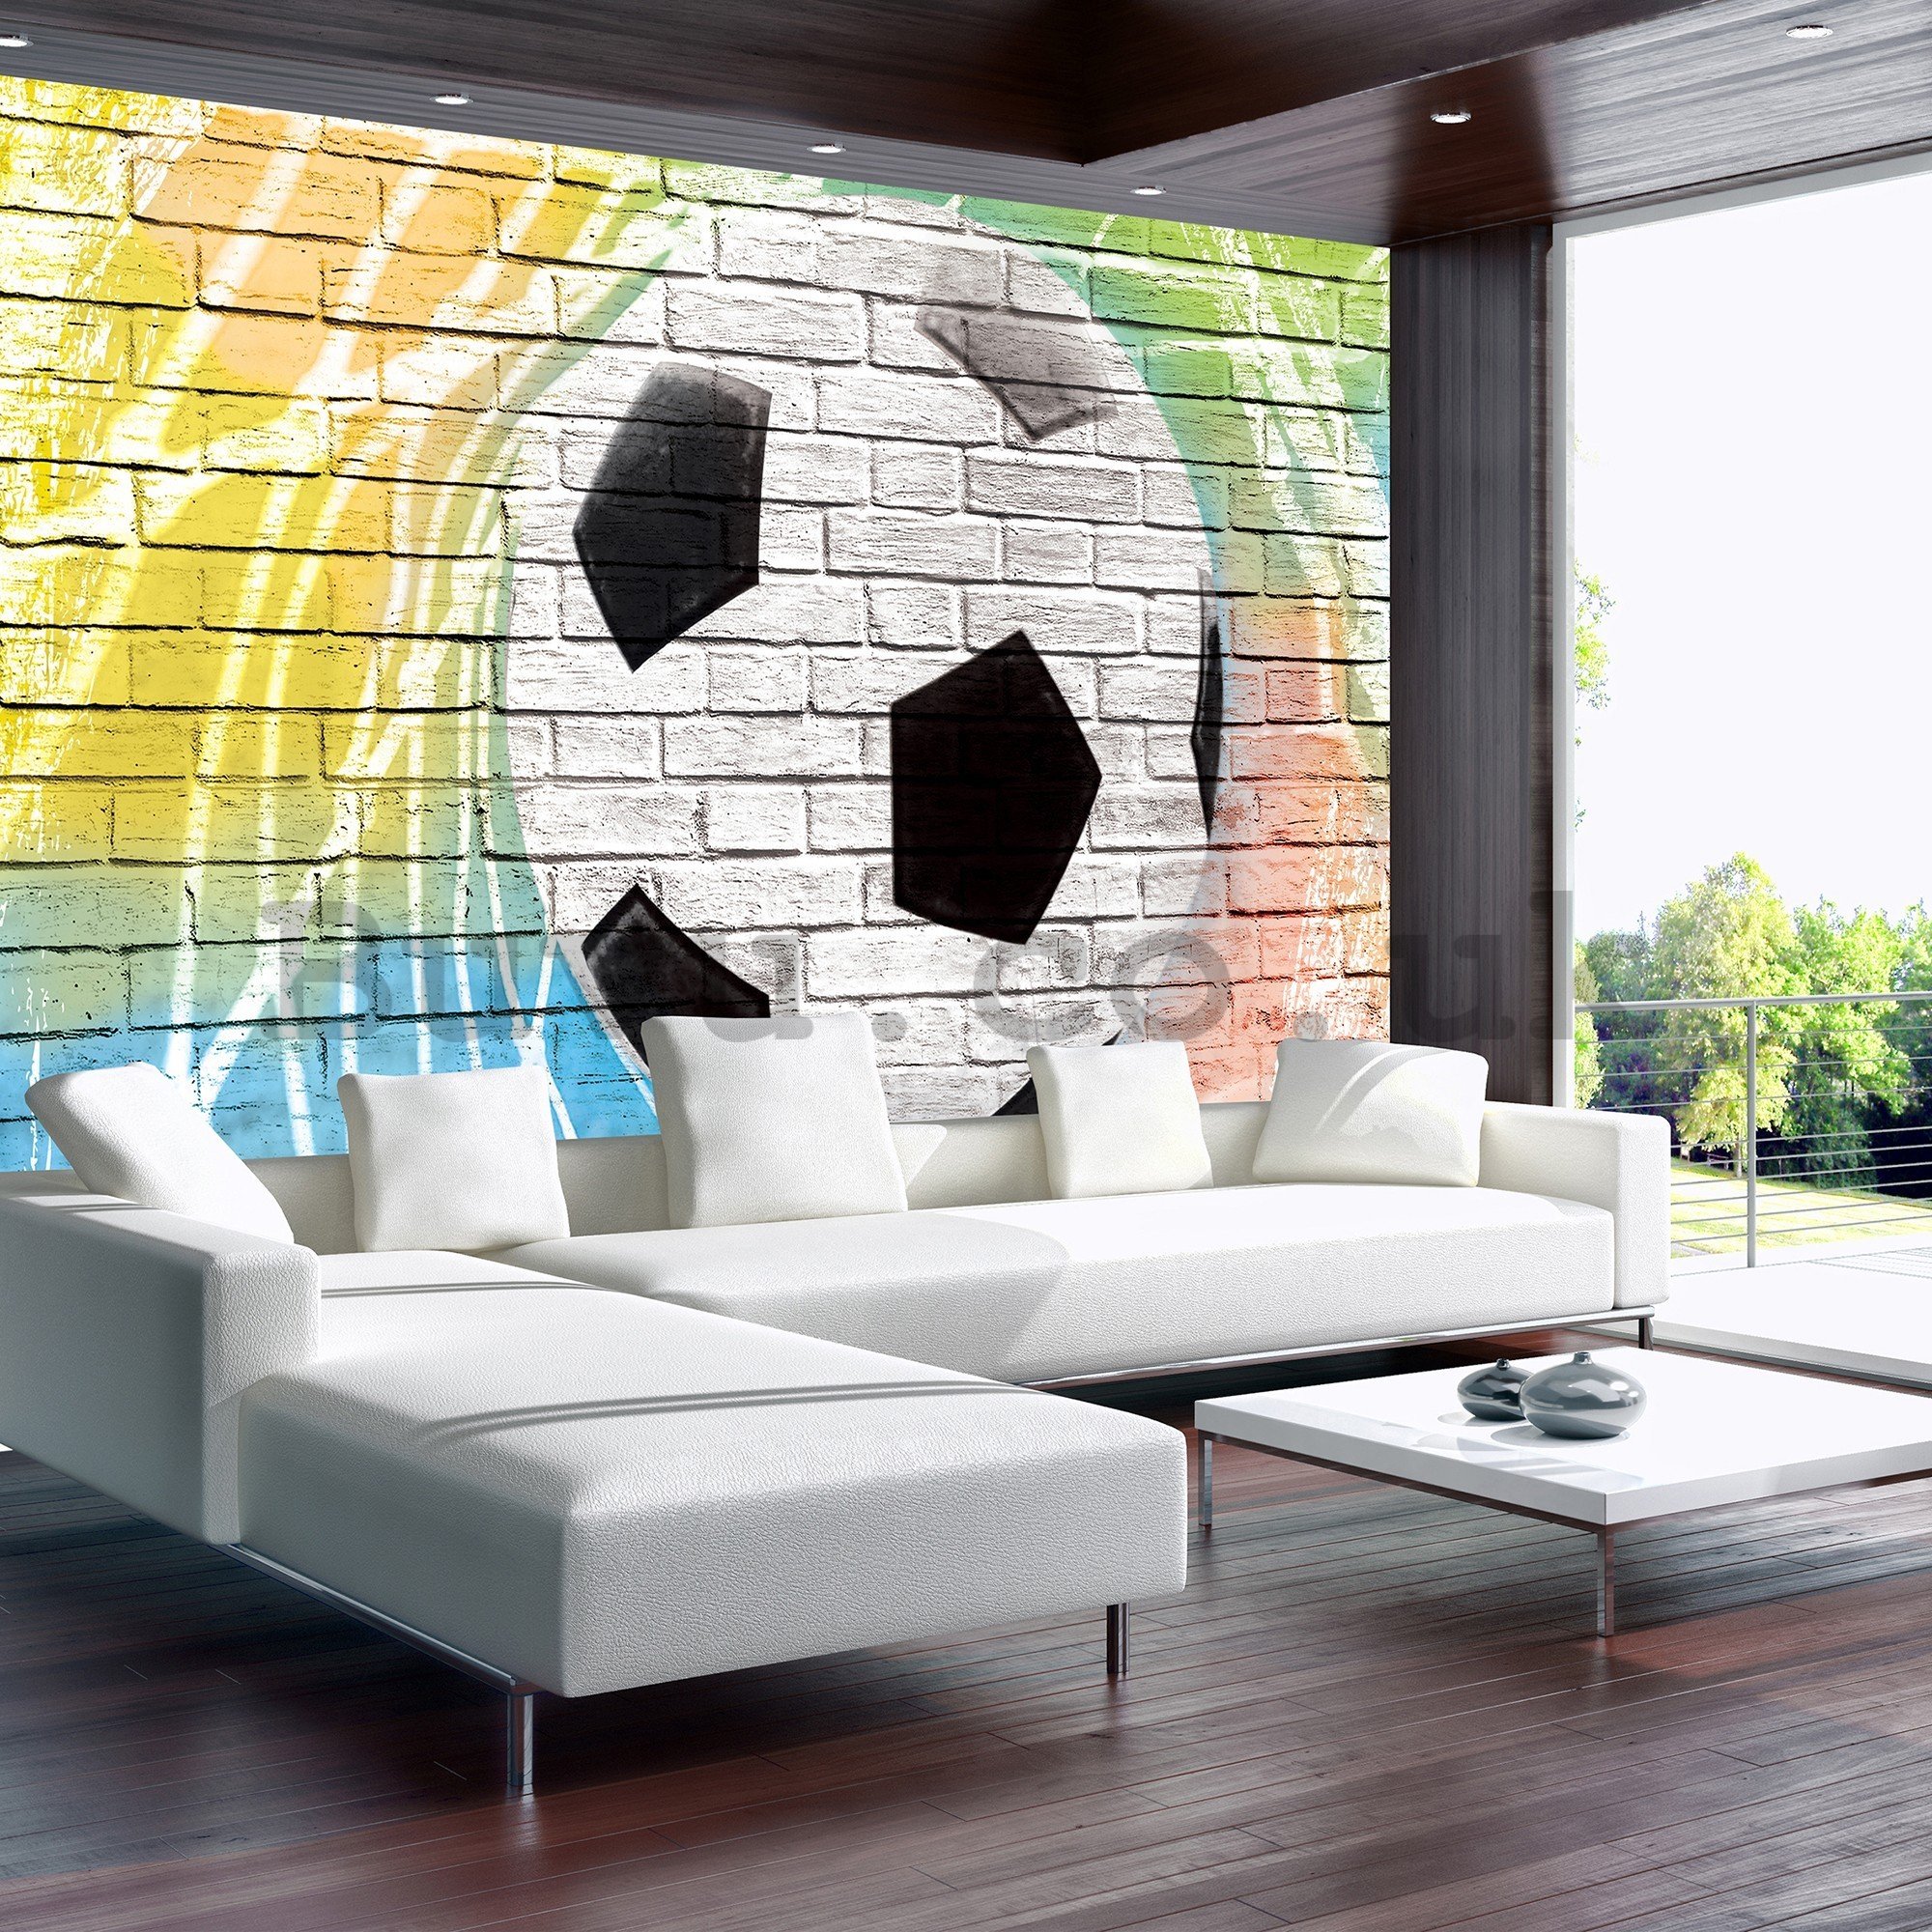 Wall mural vlies: Football ball (painted) - 416x254 cm